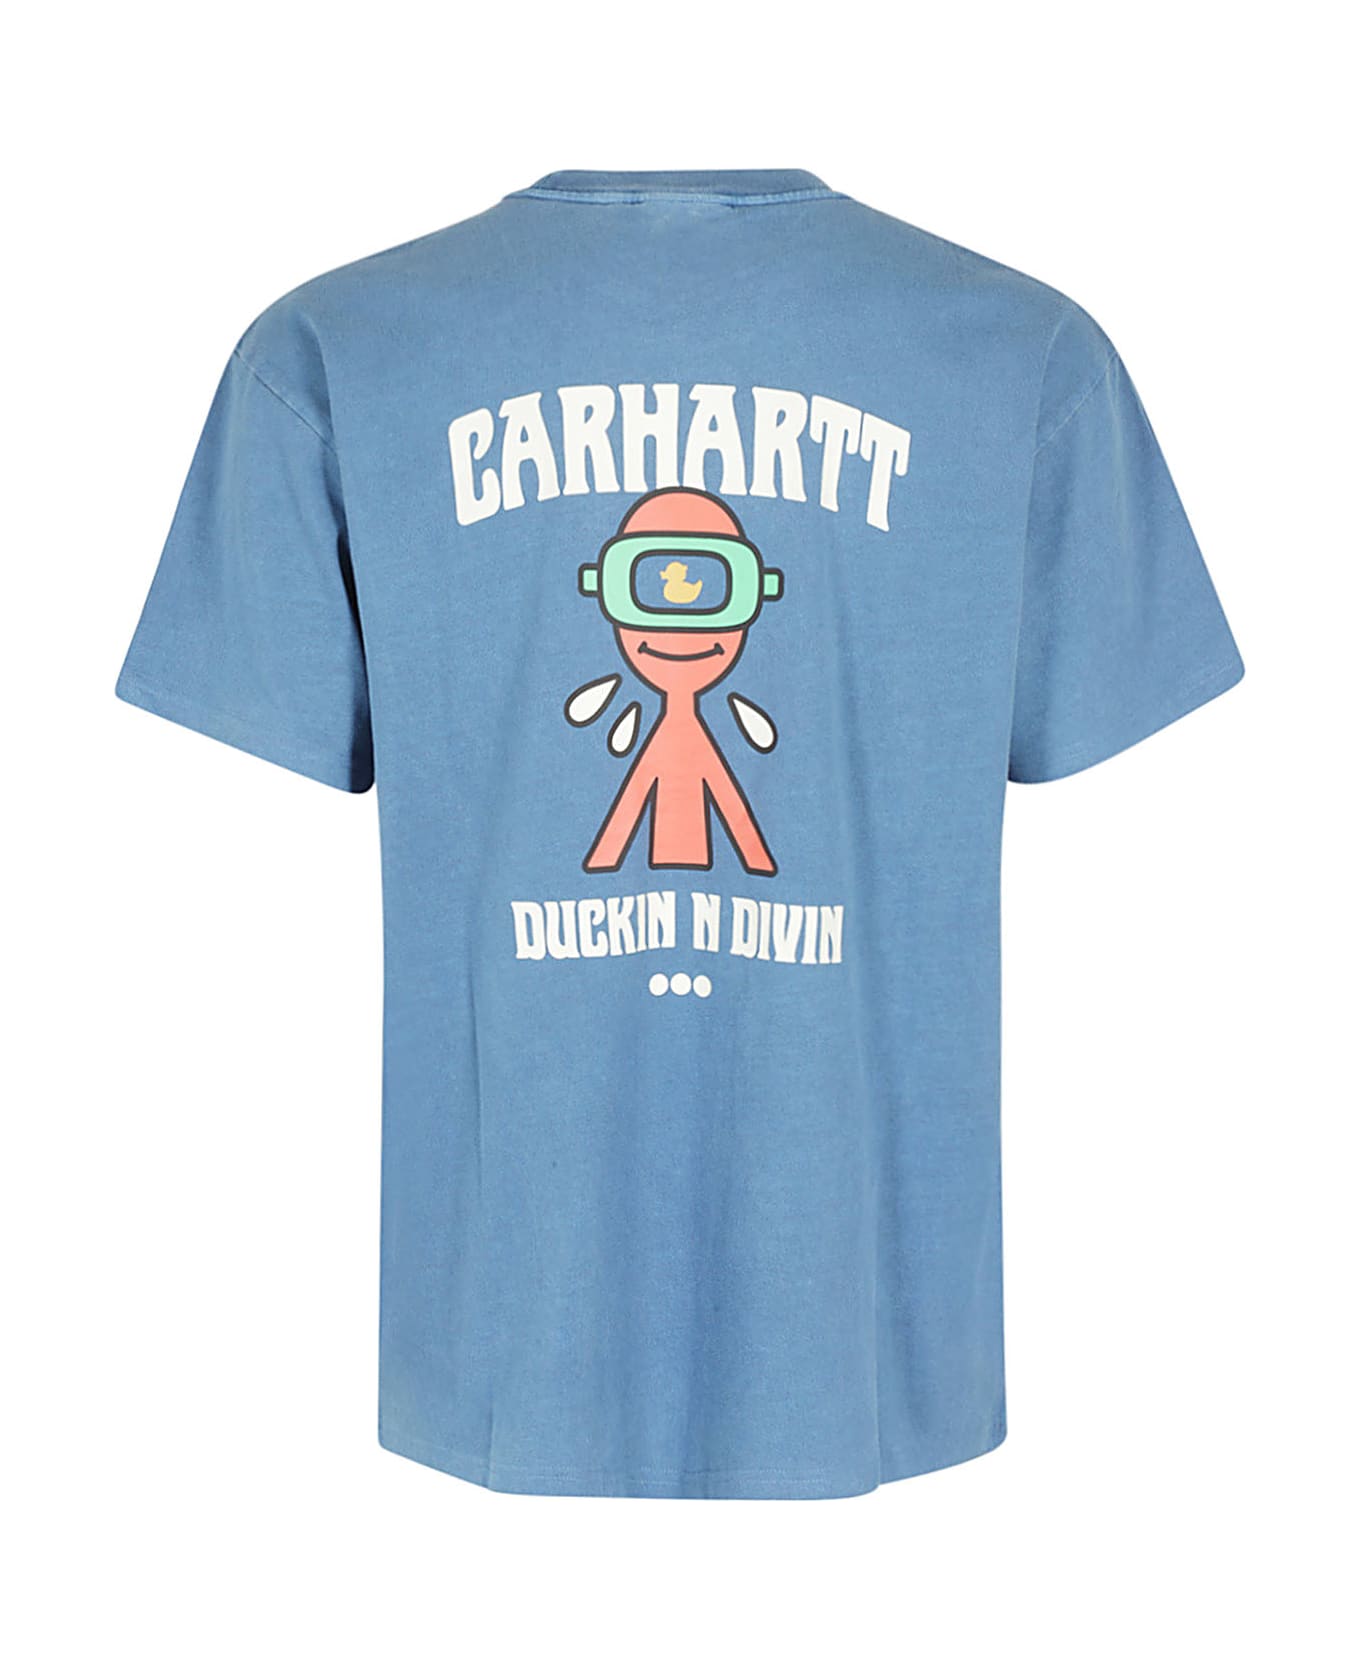 Carhartt Ss Duckin - Acapulco Garment